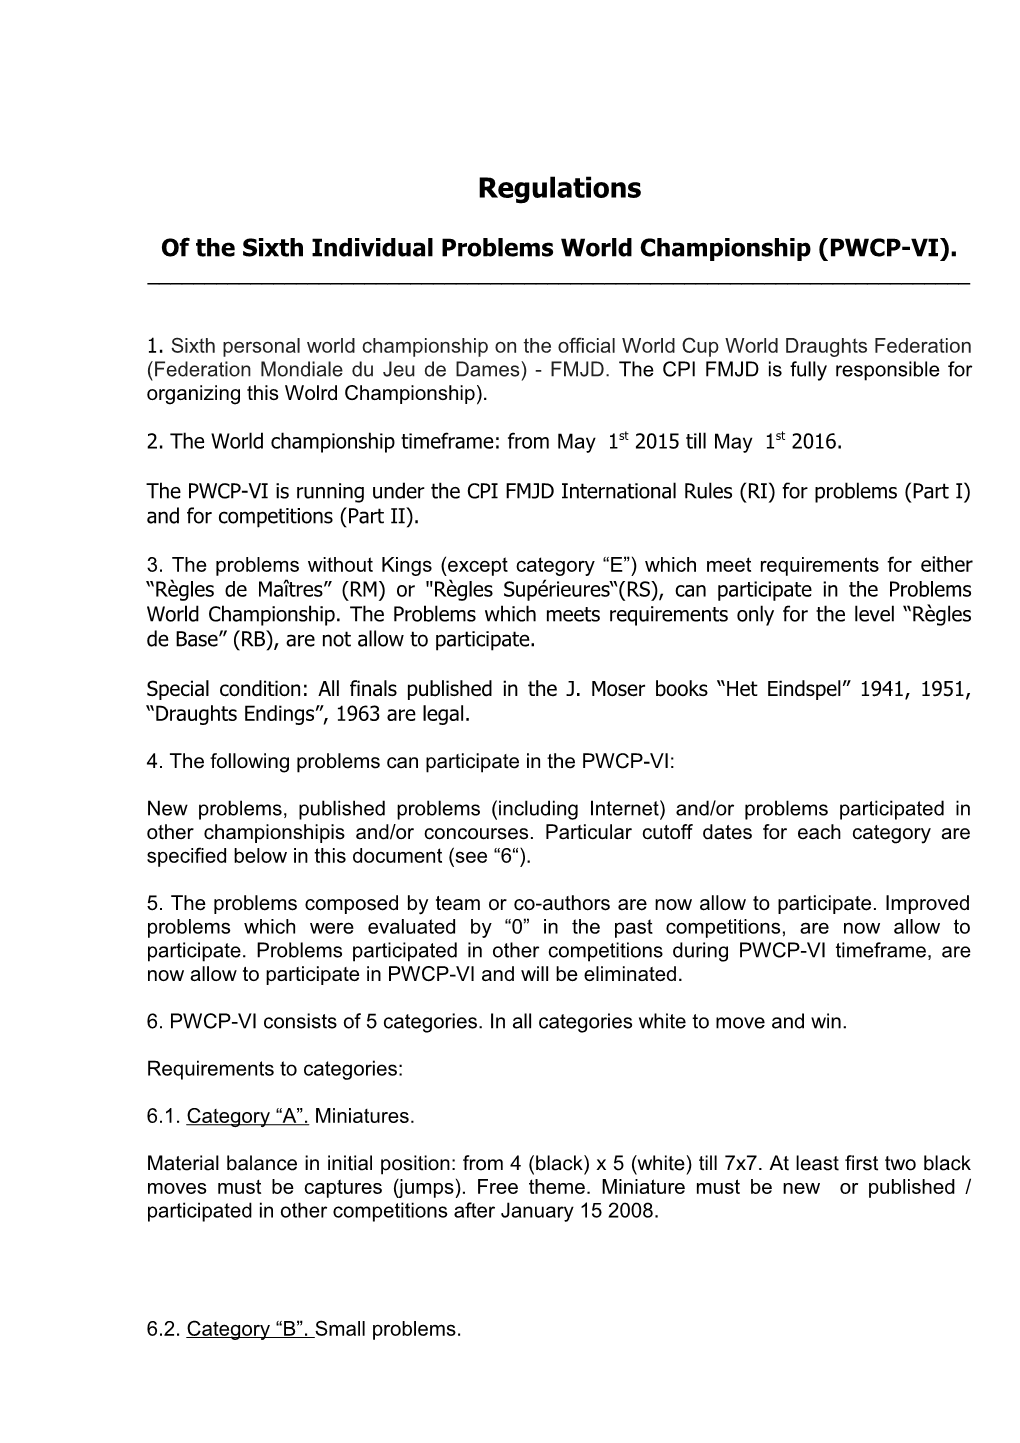 Of the Sixthindividual Problems World Championship (PWCP-VI). ______